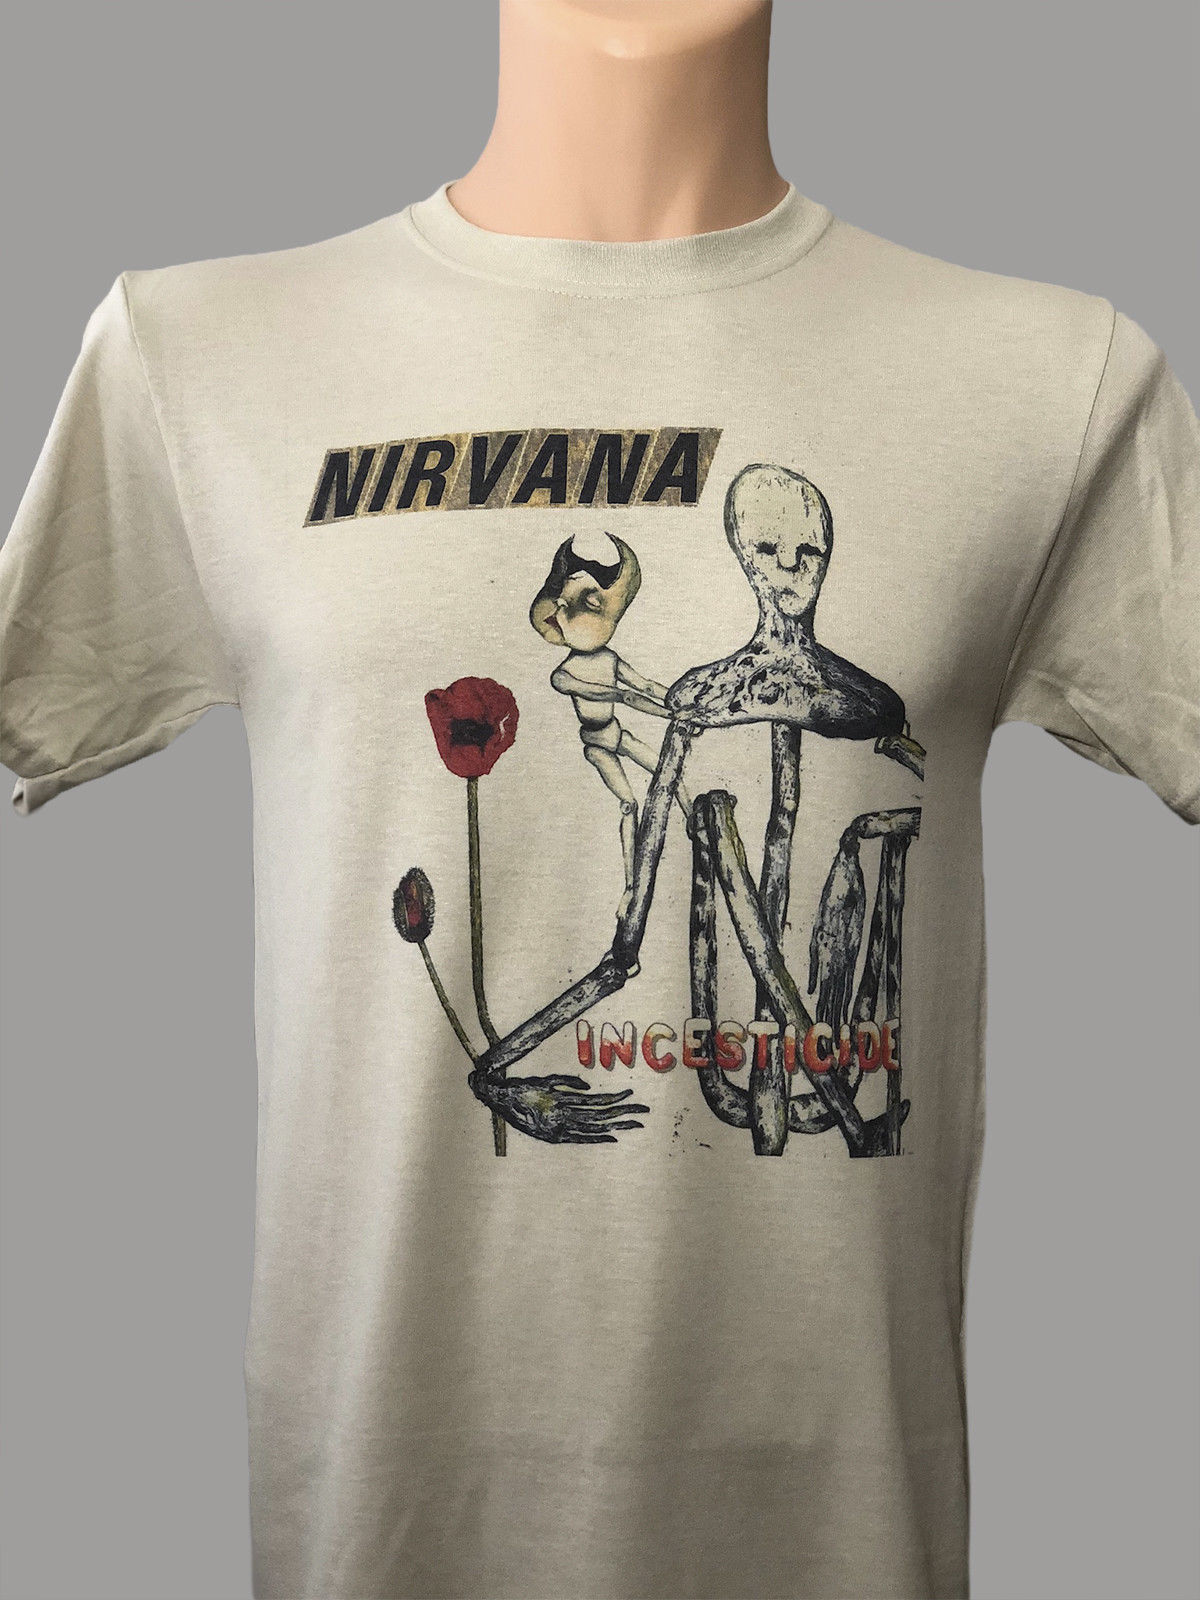 Nirvana t. Футболка Нирвана Incesticide. Обложка альбома Nirvana - Incesticide. Incesticide Nirvana Курт Кобейн. Футболки с обложками альбомов.